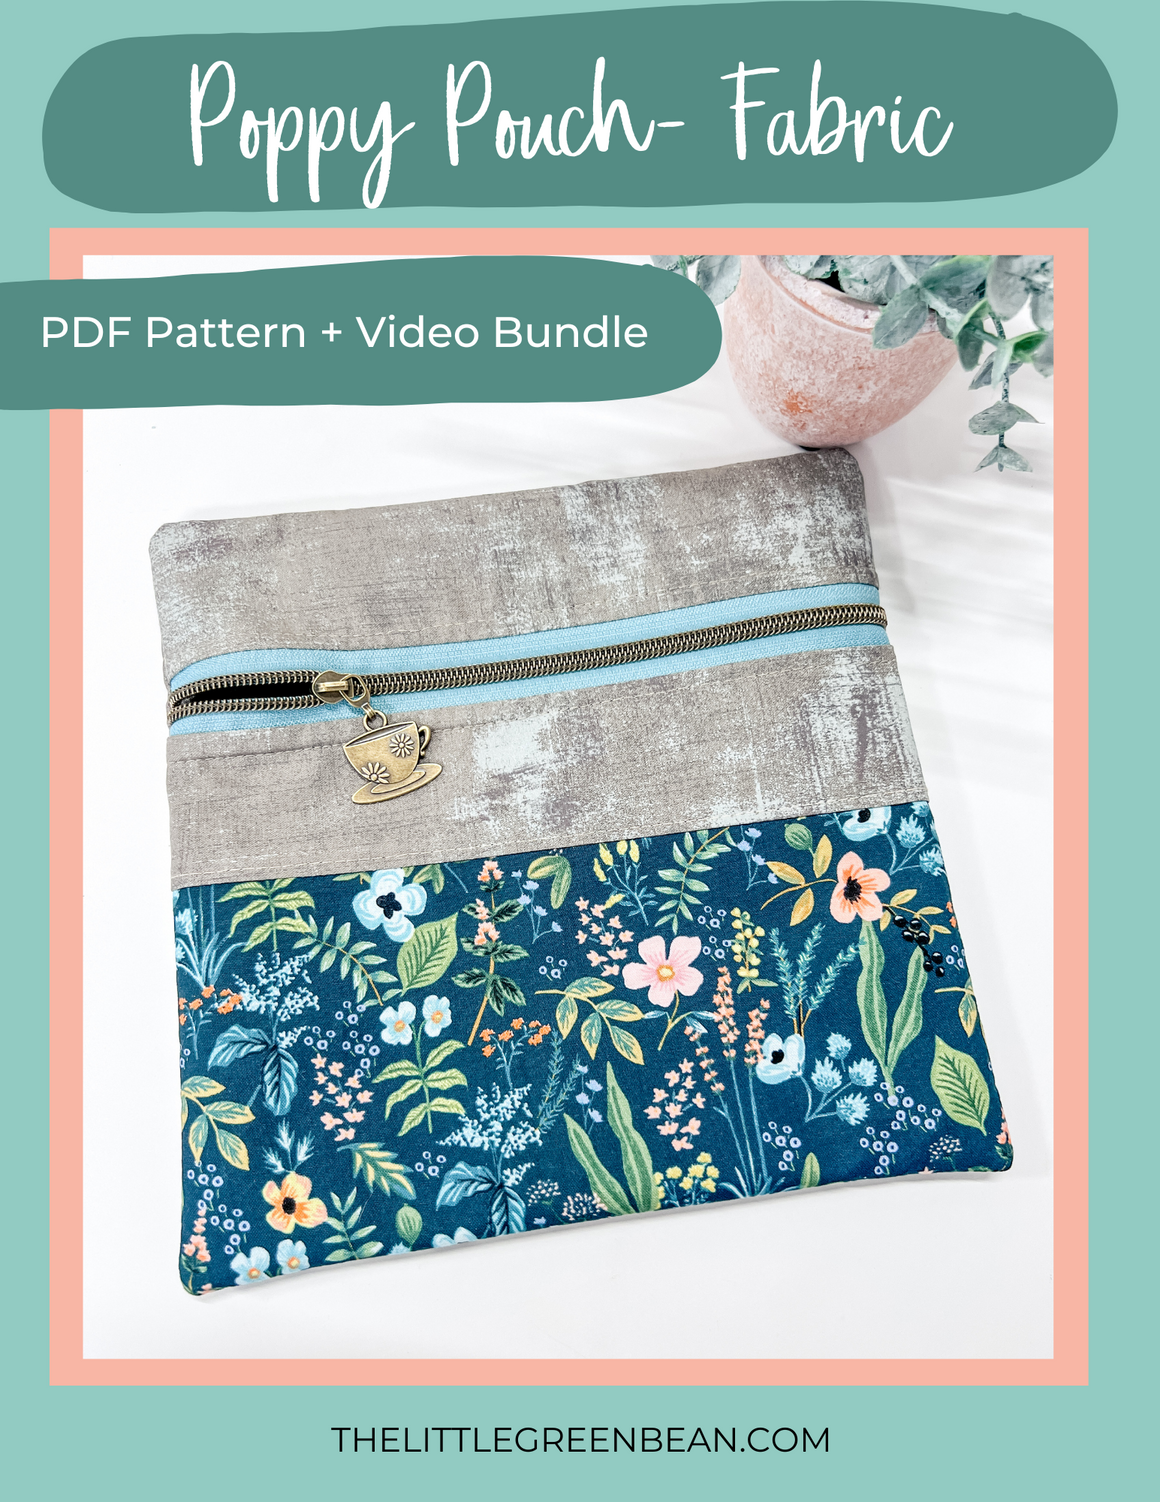 Poppy Pouch - Fabric | Video Course + Pattern Bundle